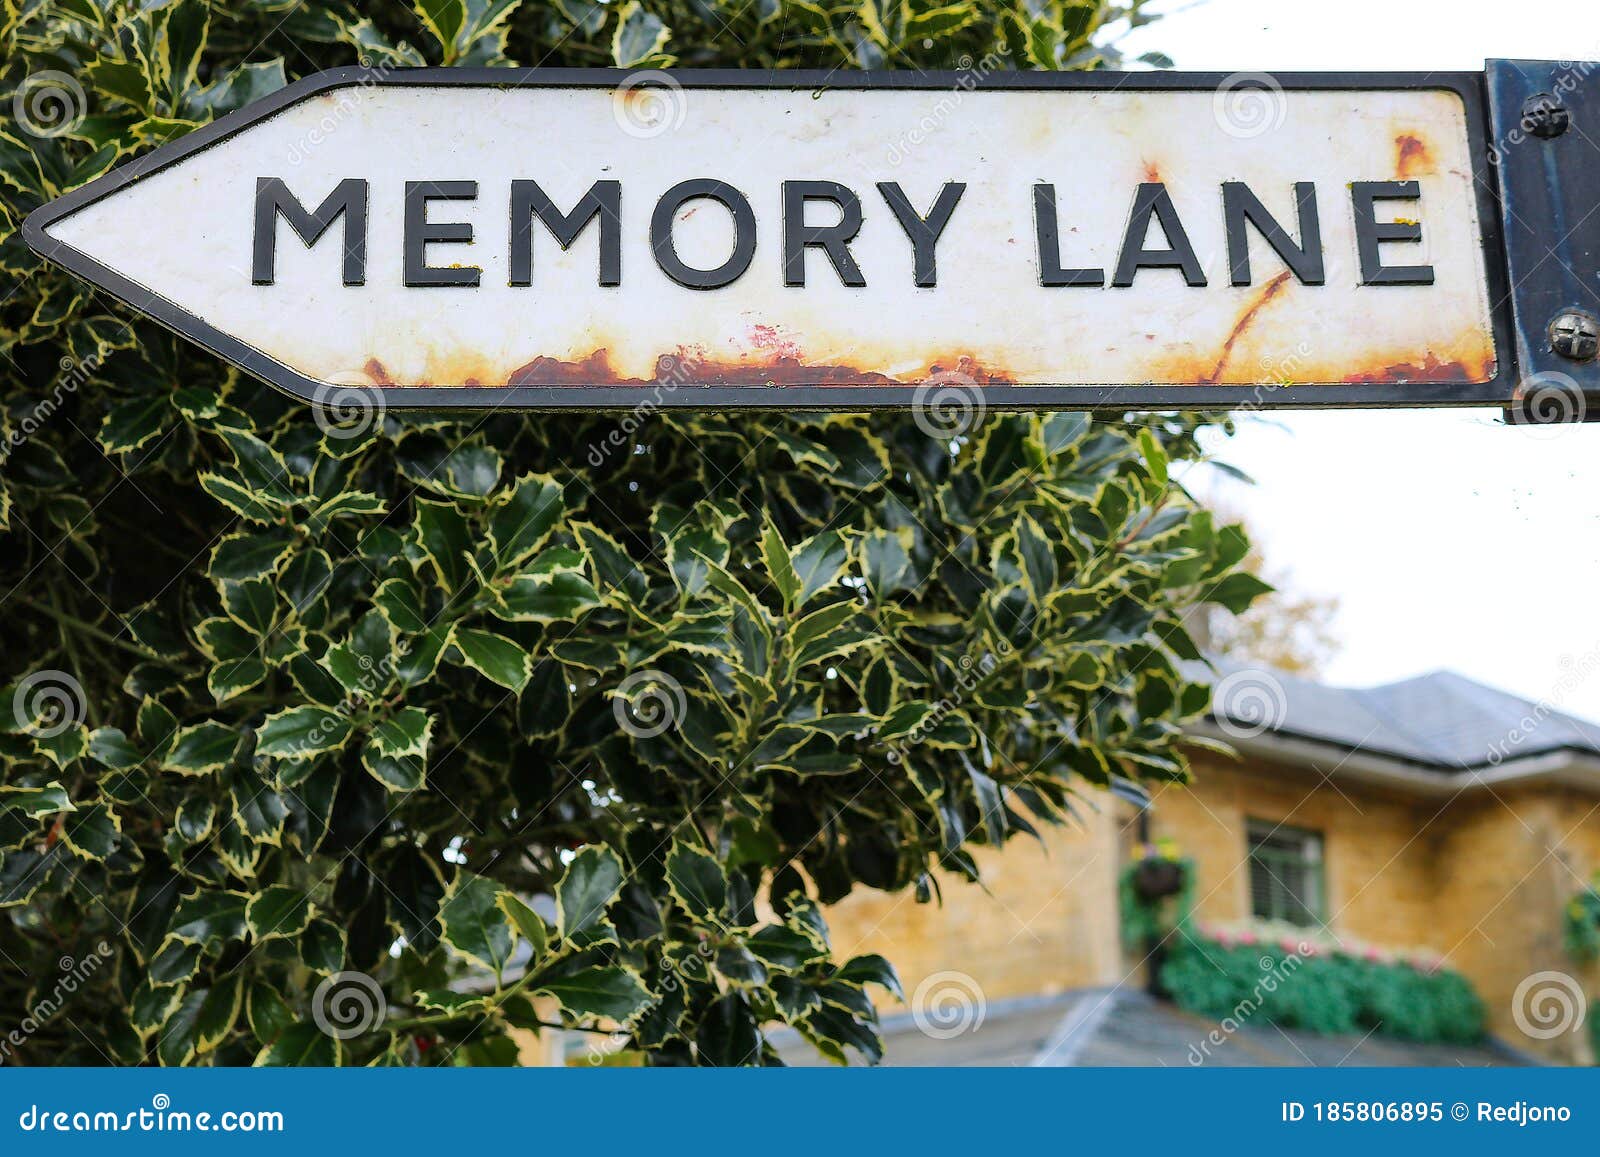 take a trip down memory lane meaning in telugu